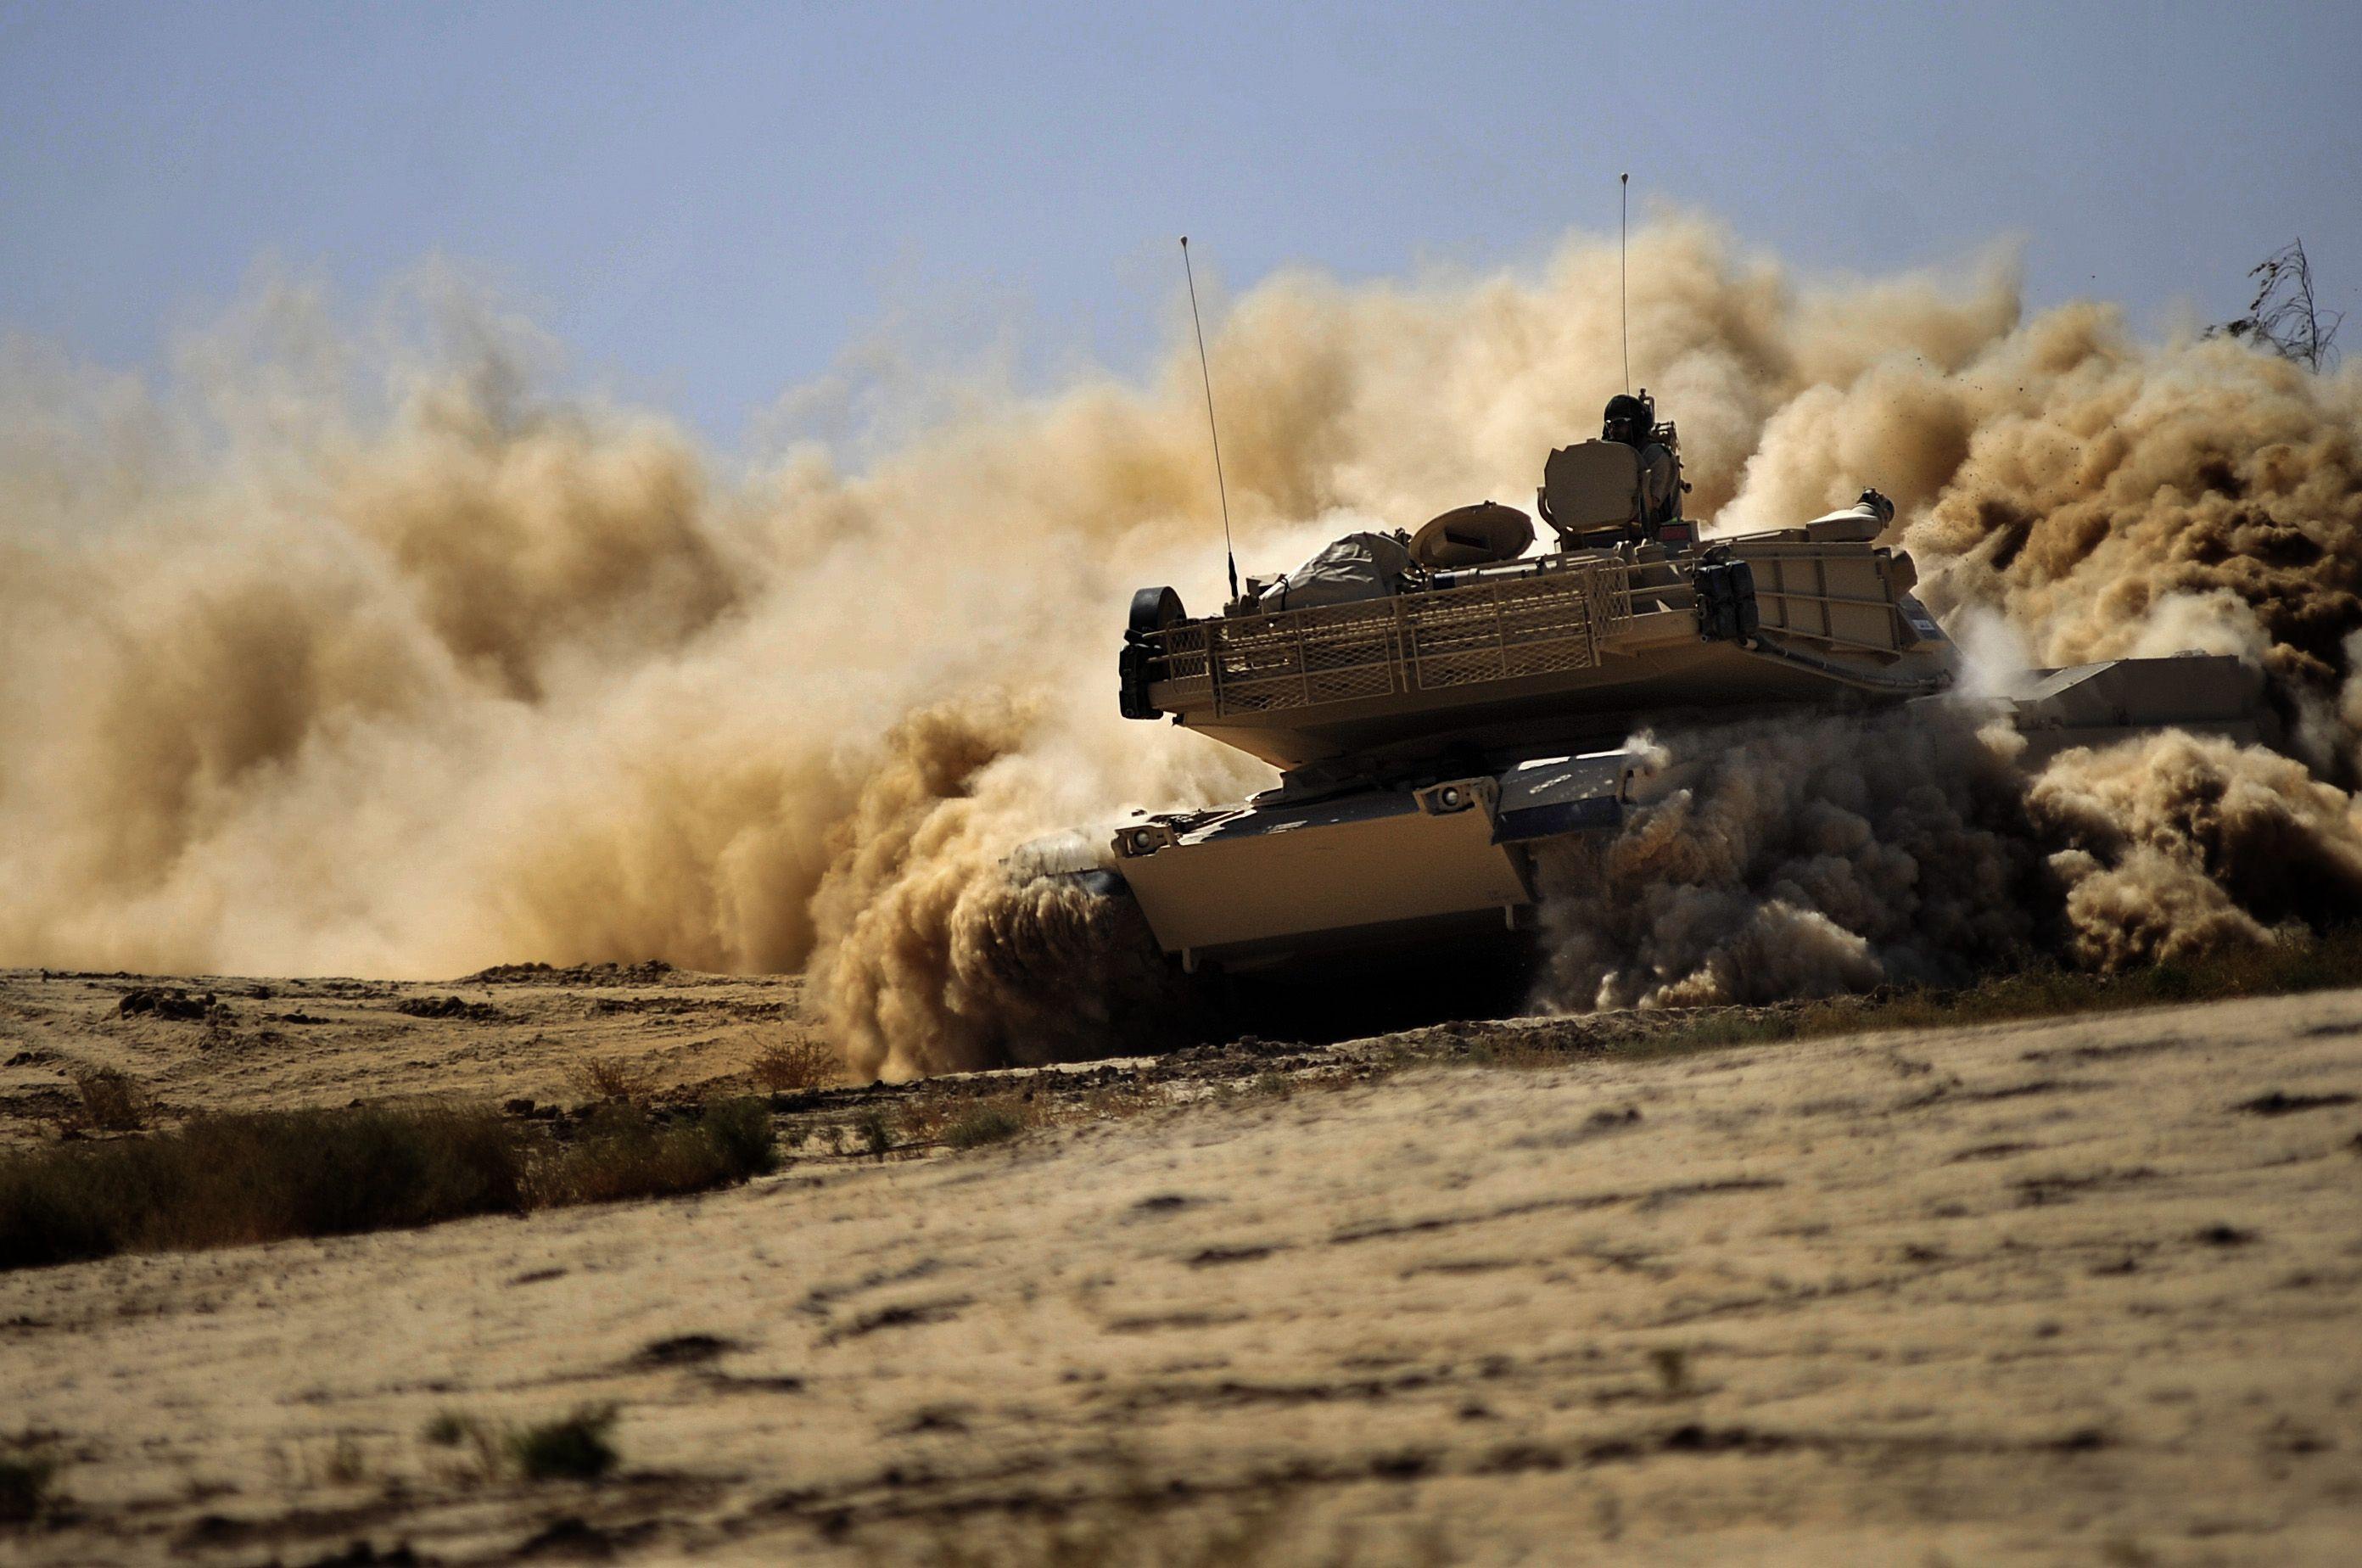 На подмогу «Абрамсам»: США запустили новую танковую программу